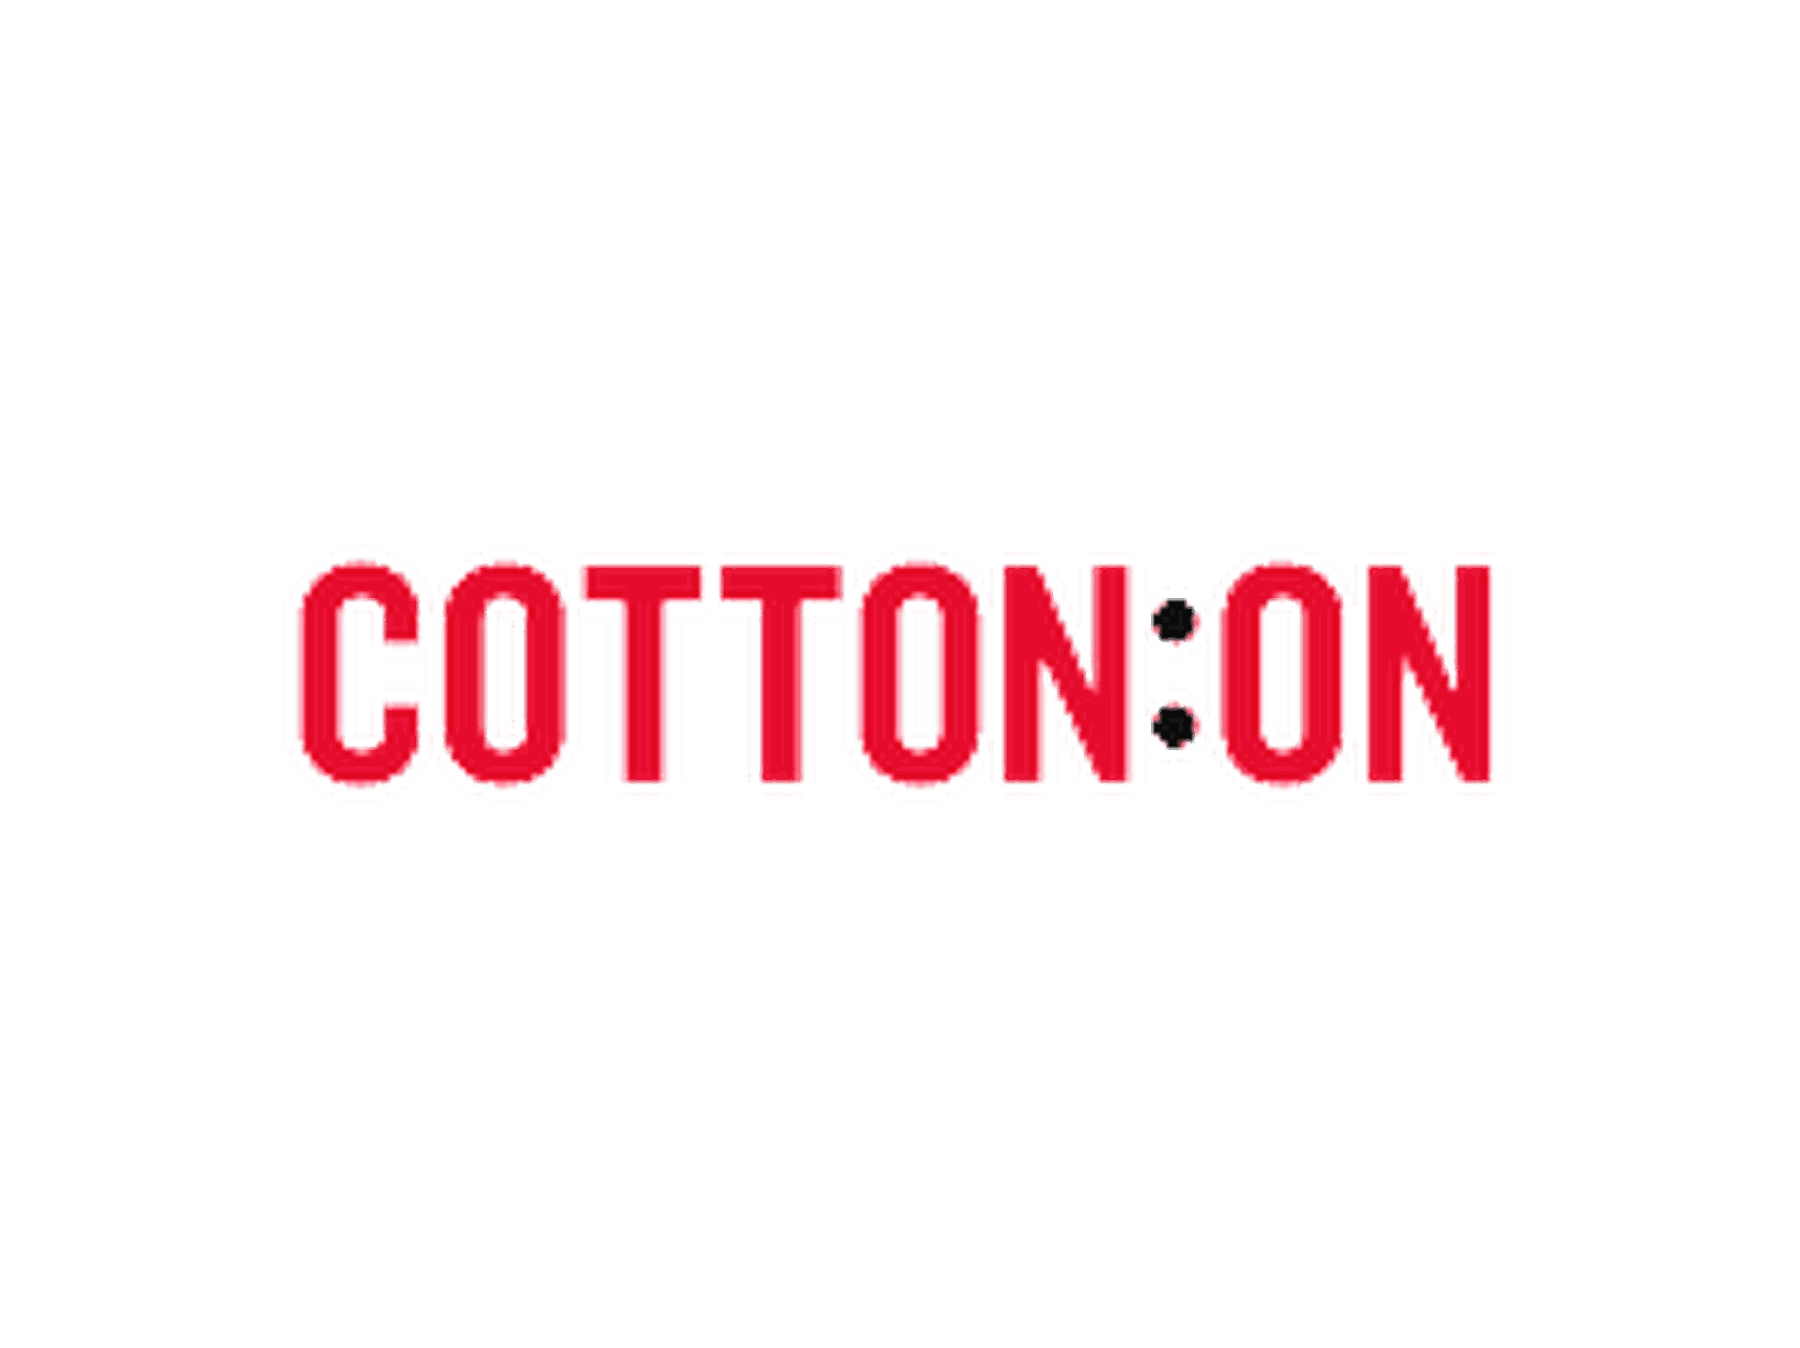 Cotton On Promo Code